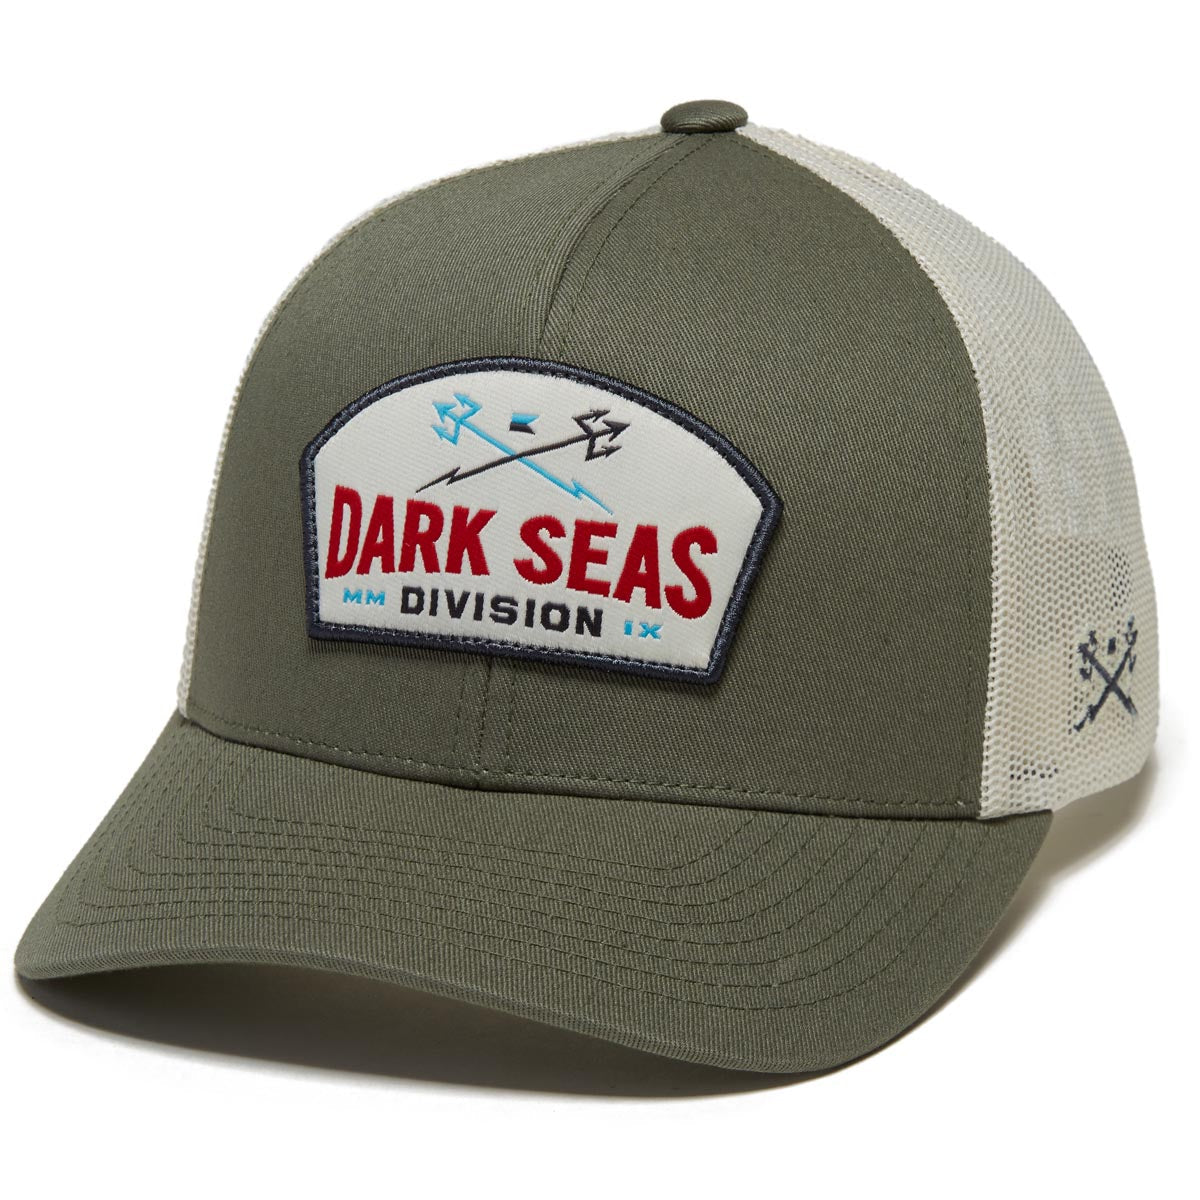 Dark Seas Prospect Hat - Olive/White image 1